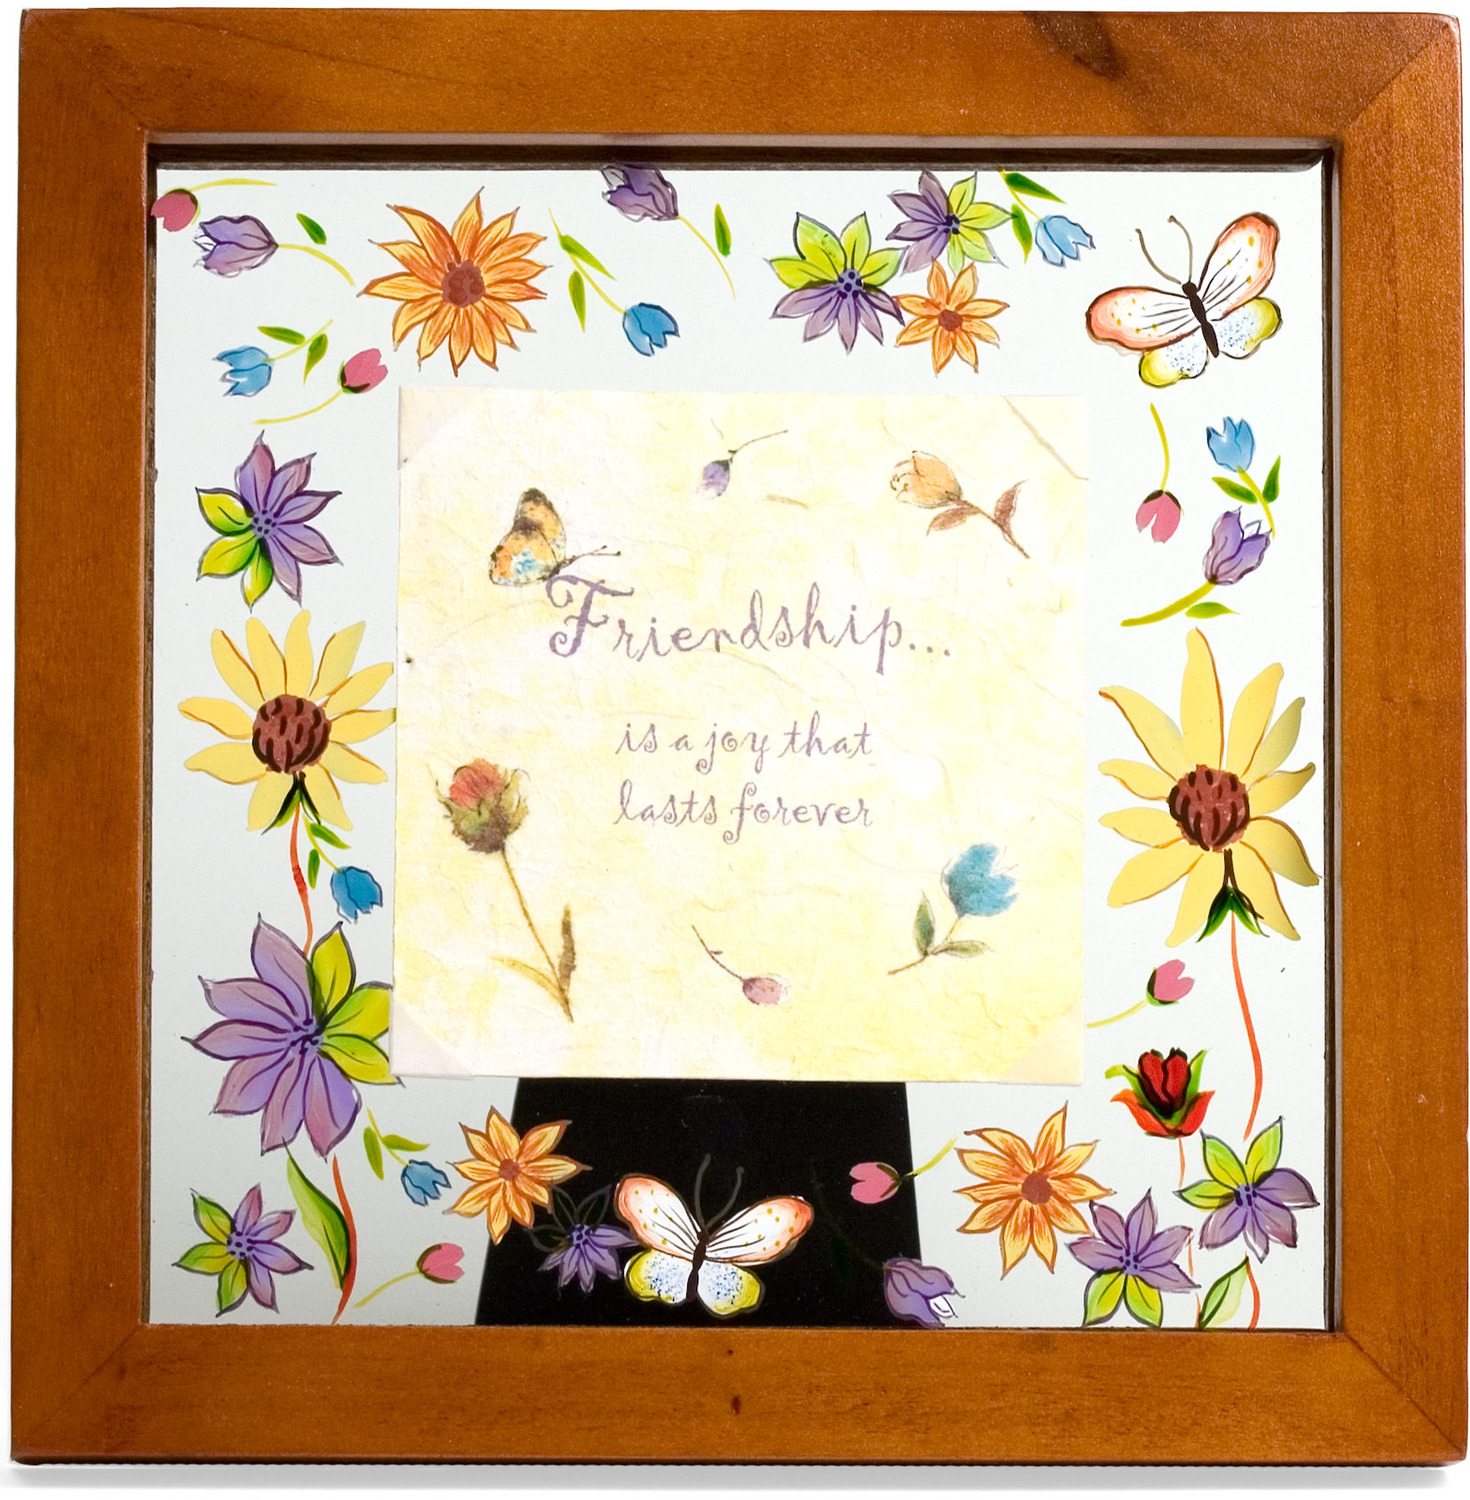 Friendship by Fields of Joy - Friendship - 6.5" Square Glass Frame/Plaque